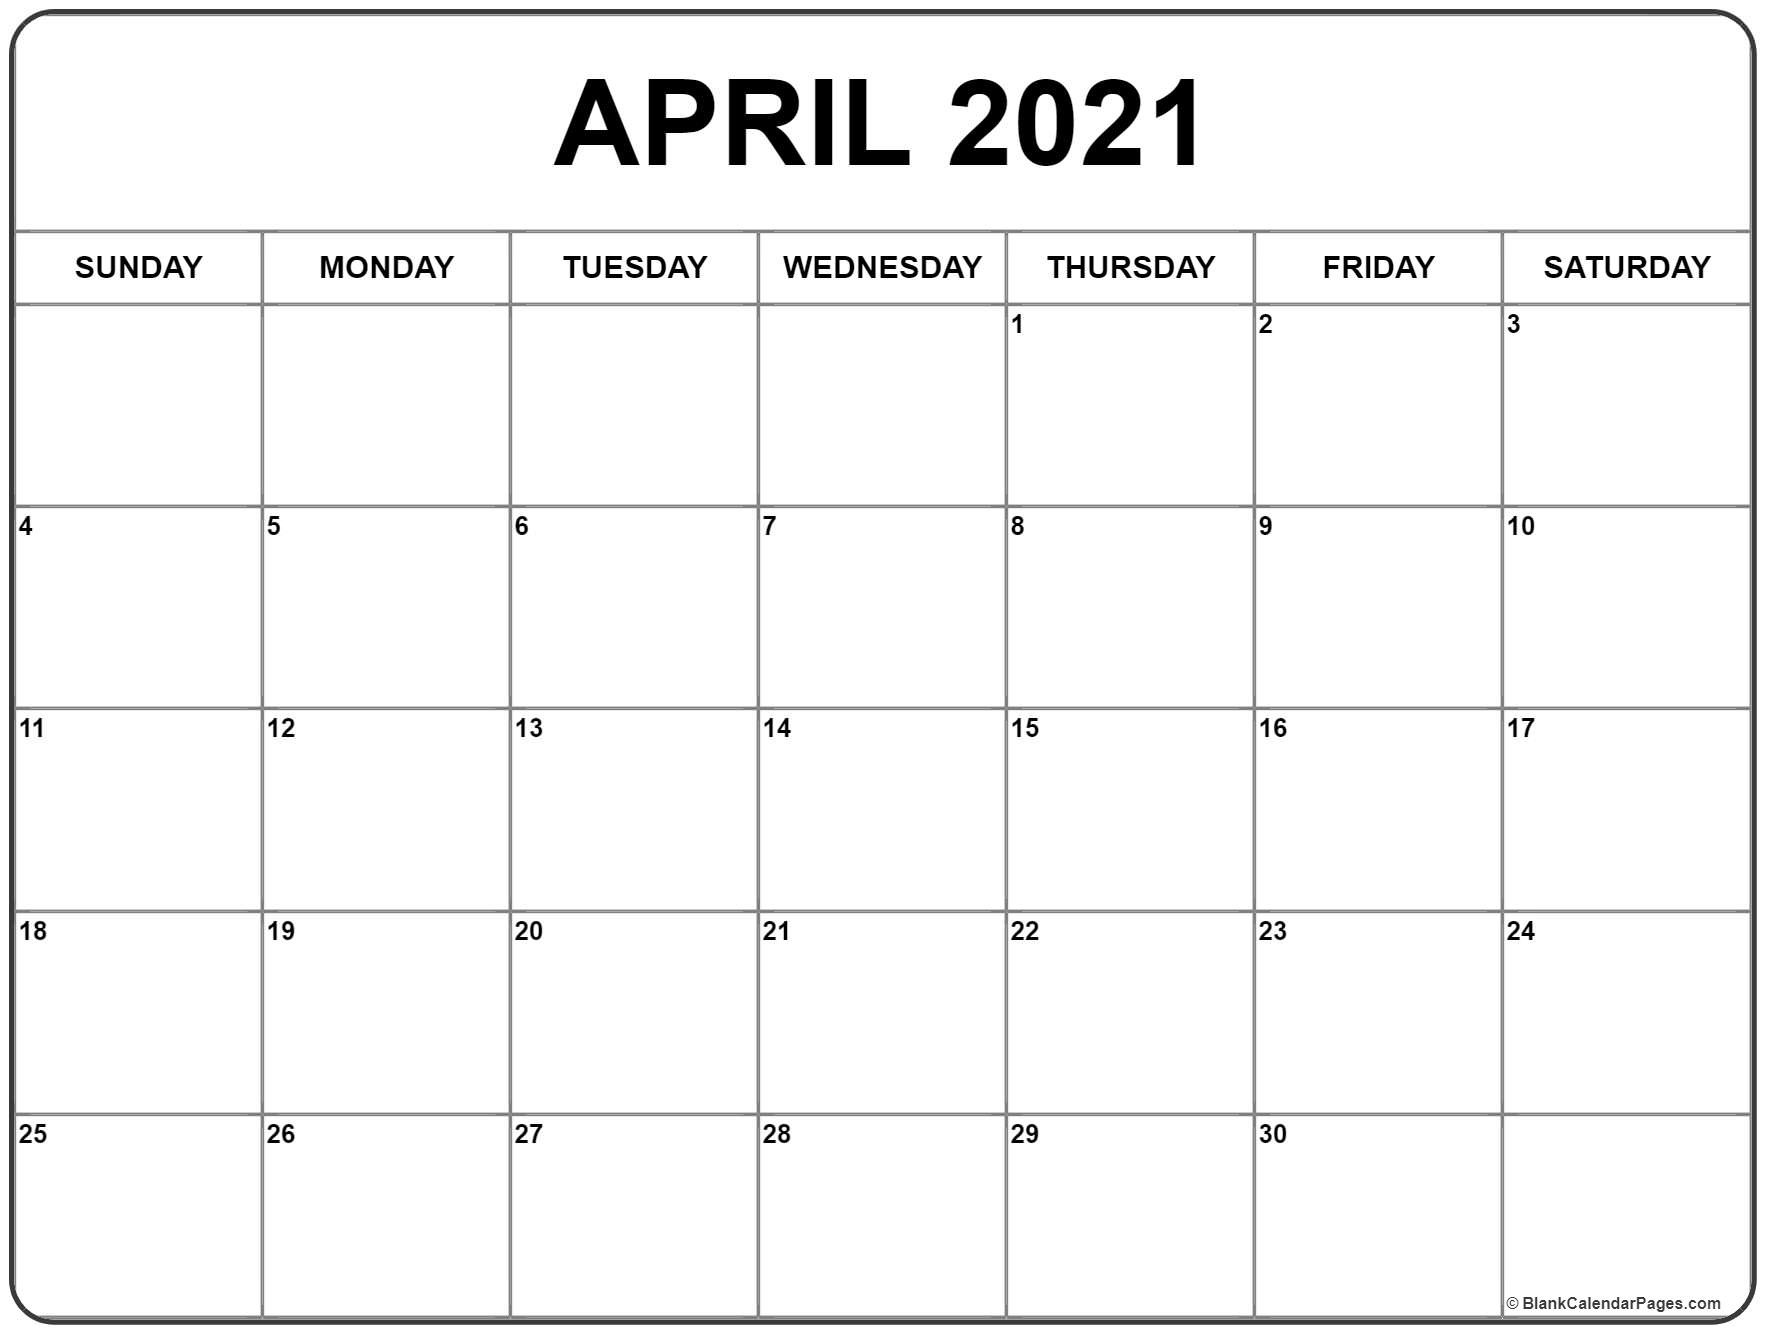 April 2021 calendar